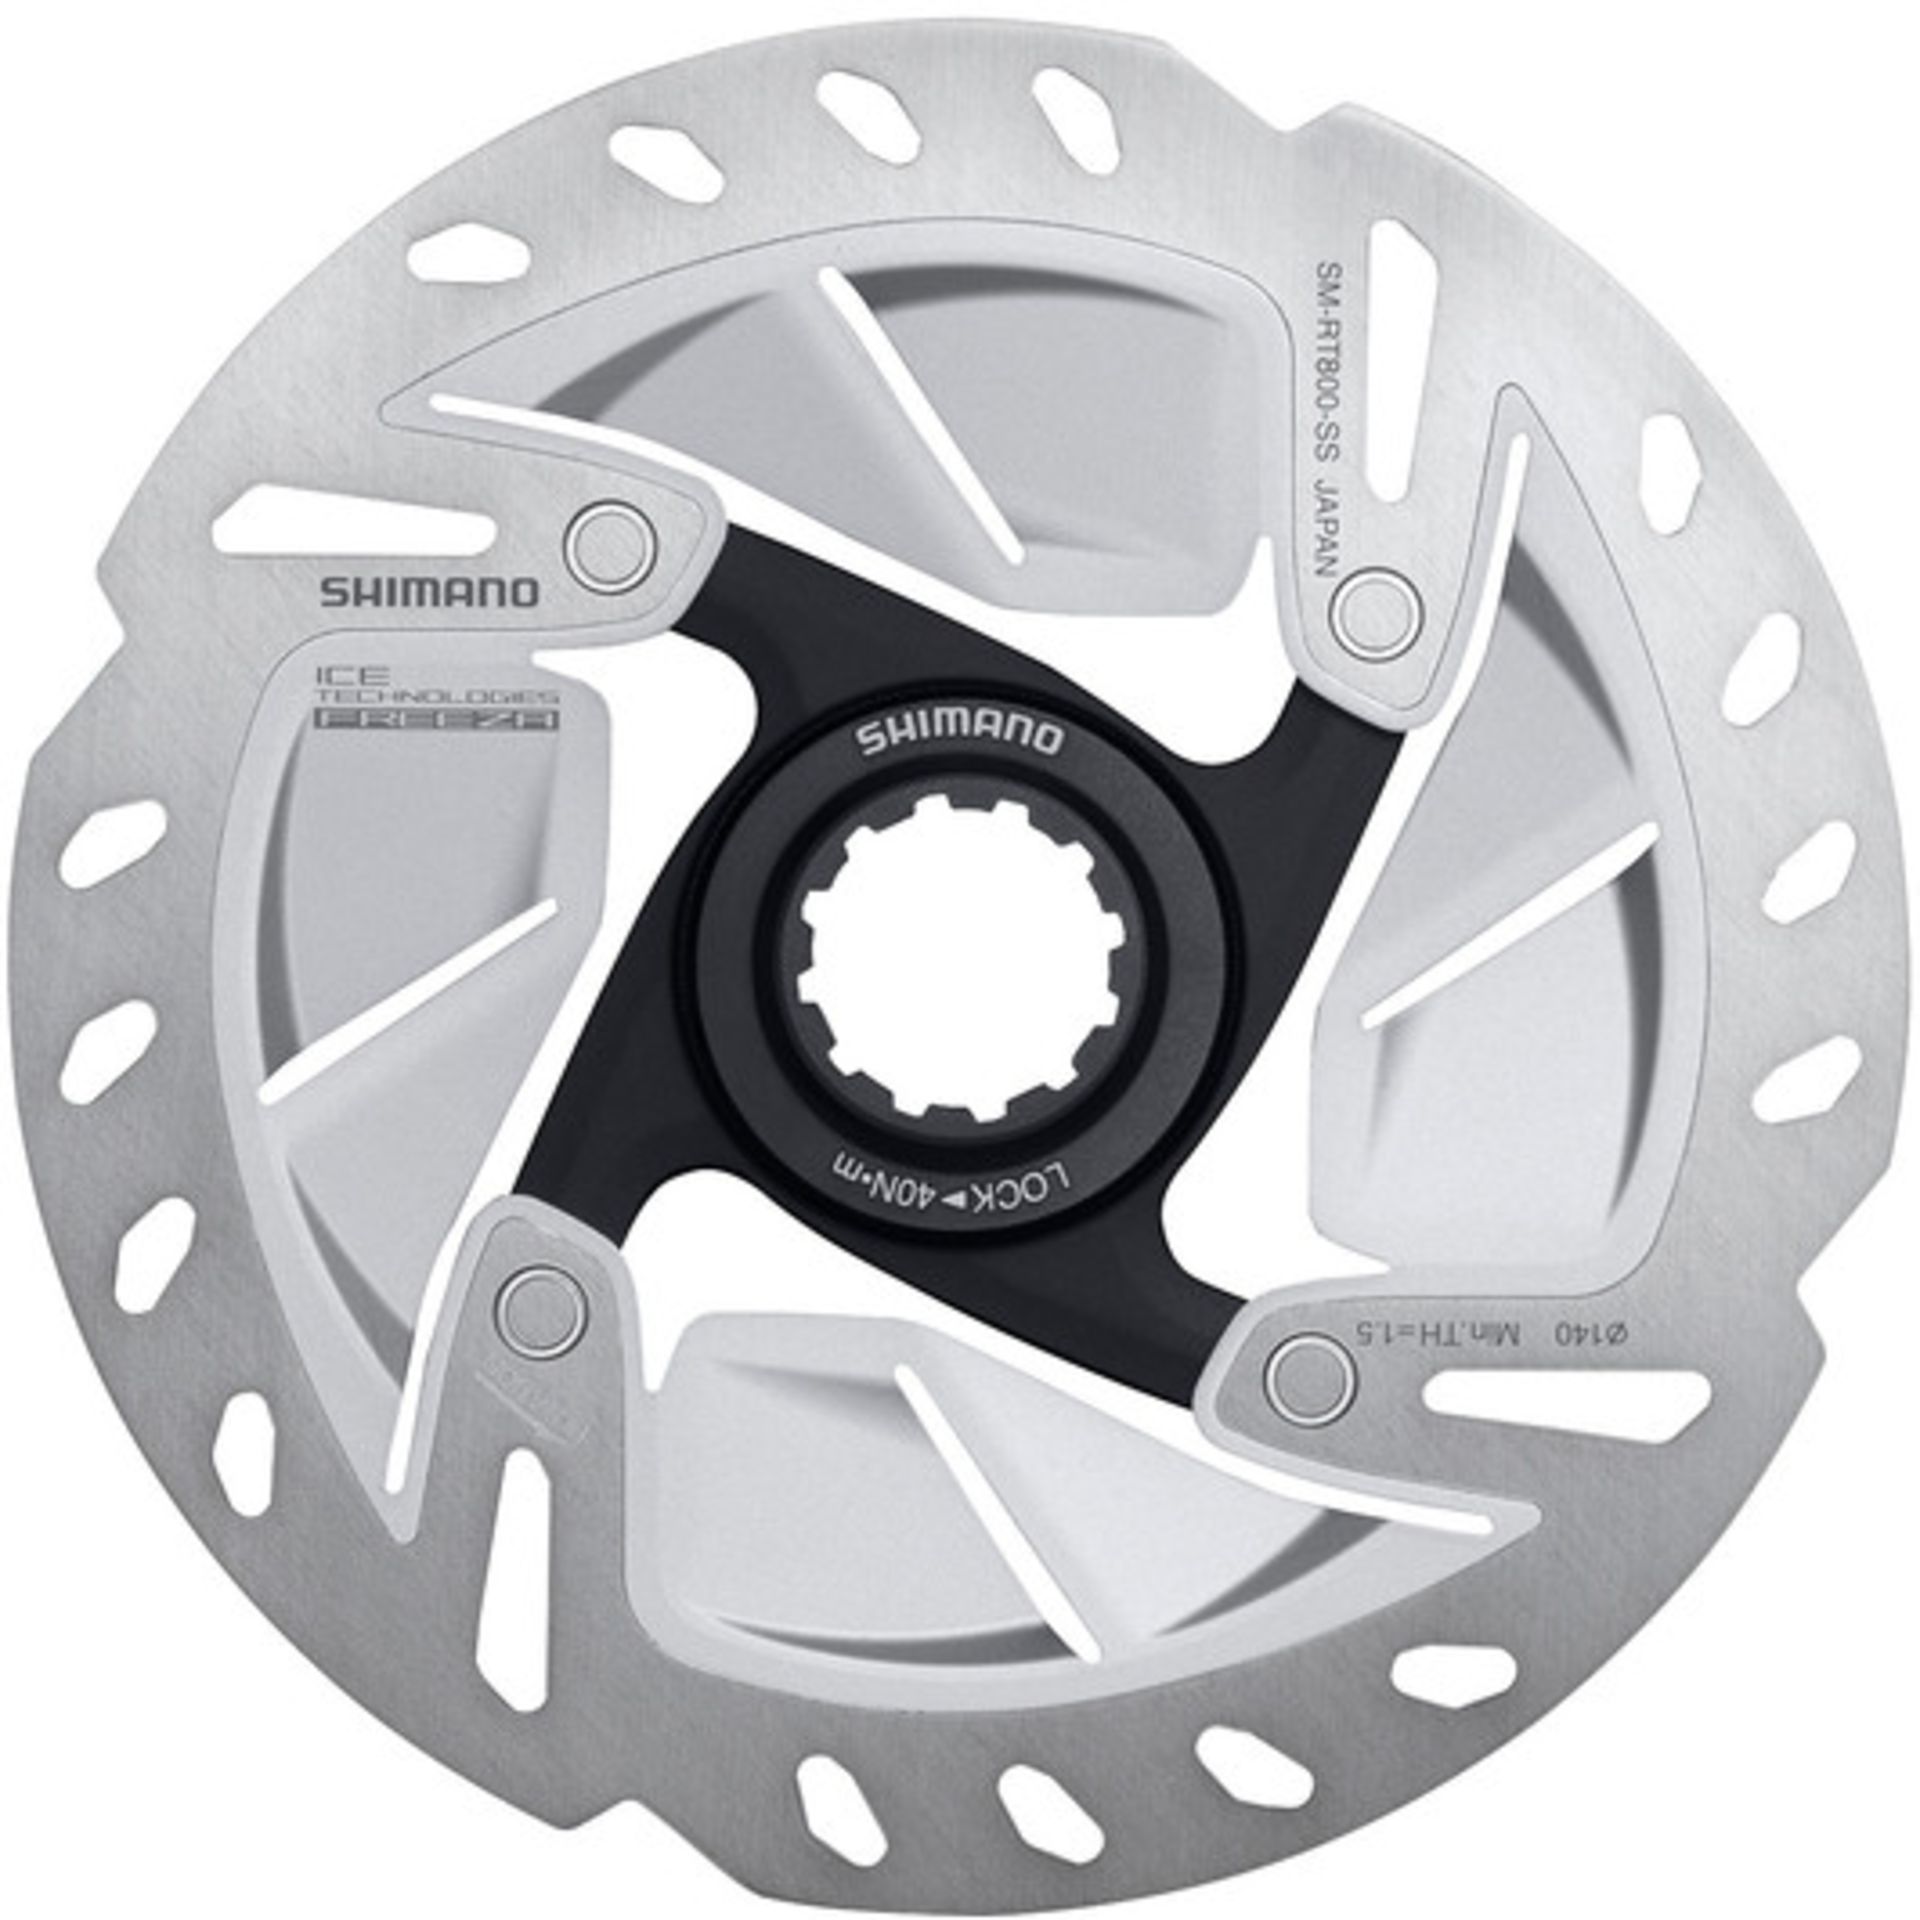 4 x Shimano Brake Discs & Rotors | See Description for Details - Bild 4 aus 4